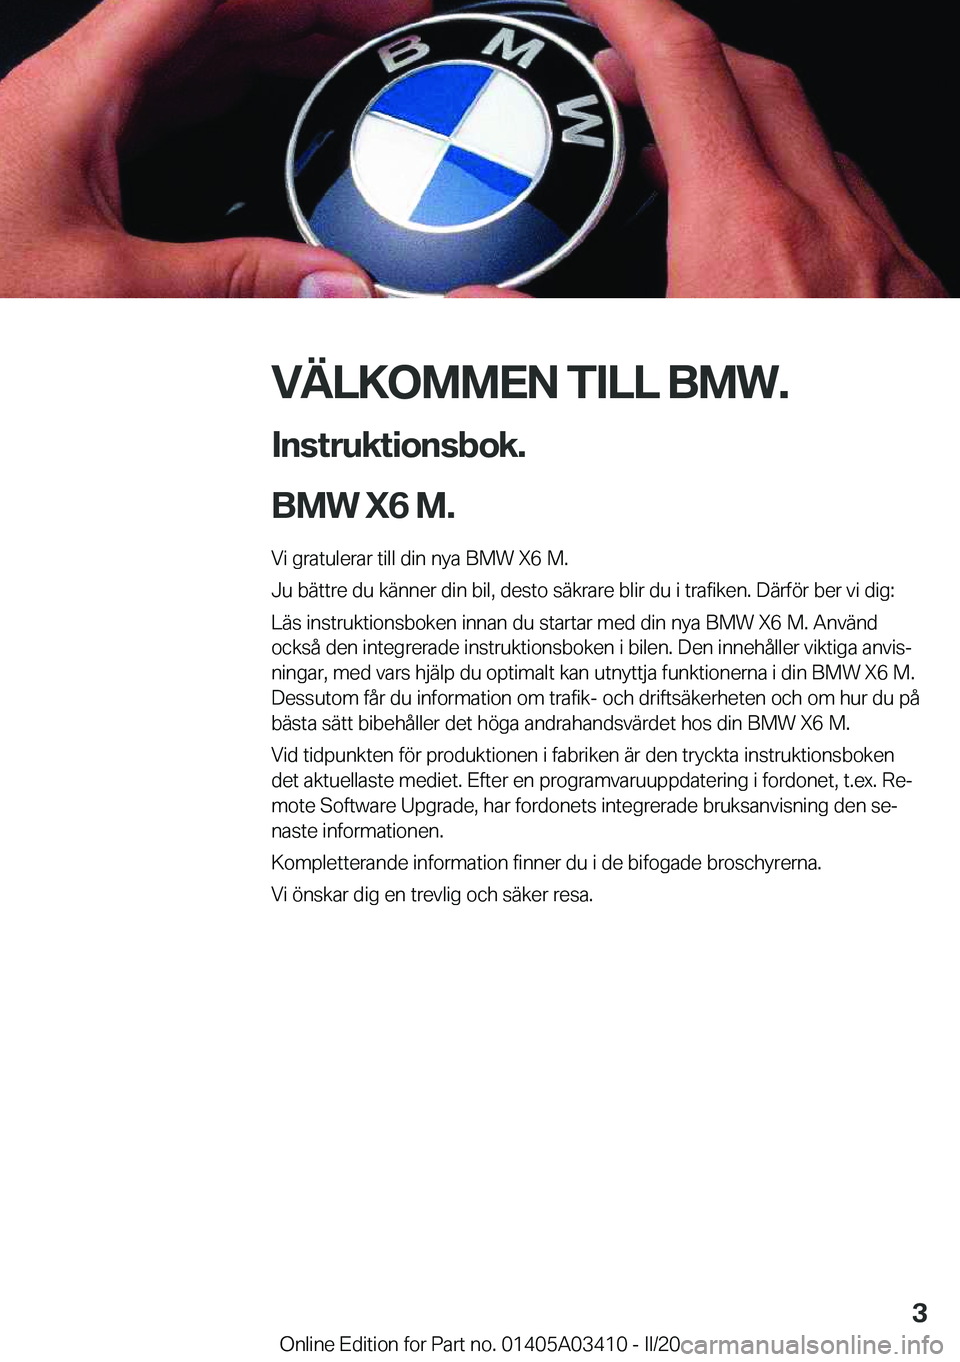 BMW X6 M 2020  InstruktionsbÖcker (in Swedish) �V�Ä�L�K�O�M�M�E�N��T�I�L�L��B�M�W�.�I�n�s�t�r�u�k�t�i�o�n�s�b�o�k�.
�B�M�W��X�6��M�.
�V�i��g�r�a�t�u�l�e�r�a�r��t�i�l�l��d�i�n��n�y�a��B�M�W��X�6��M�.
�J�u��b�ä�t�t�r�e��d�u��k�ä�n�n